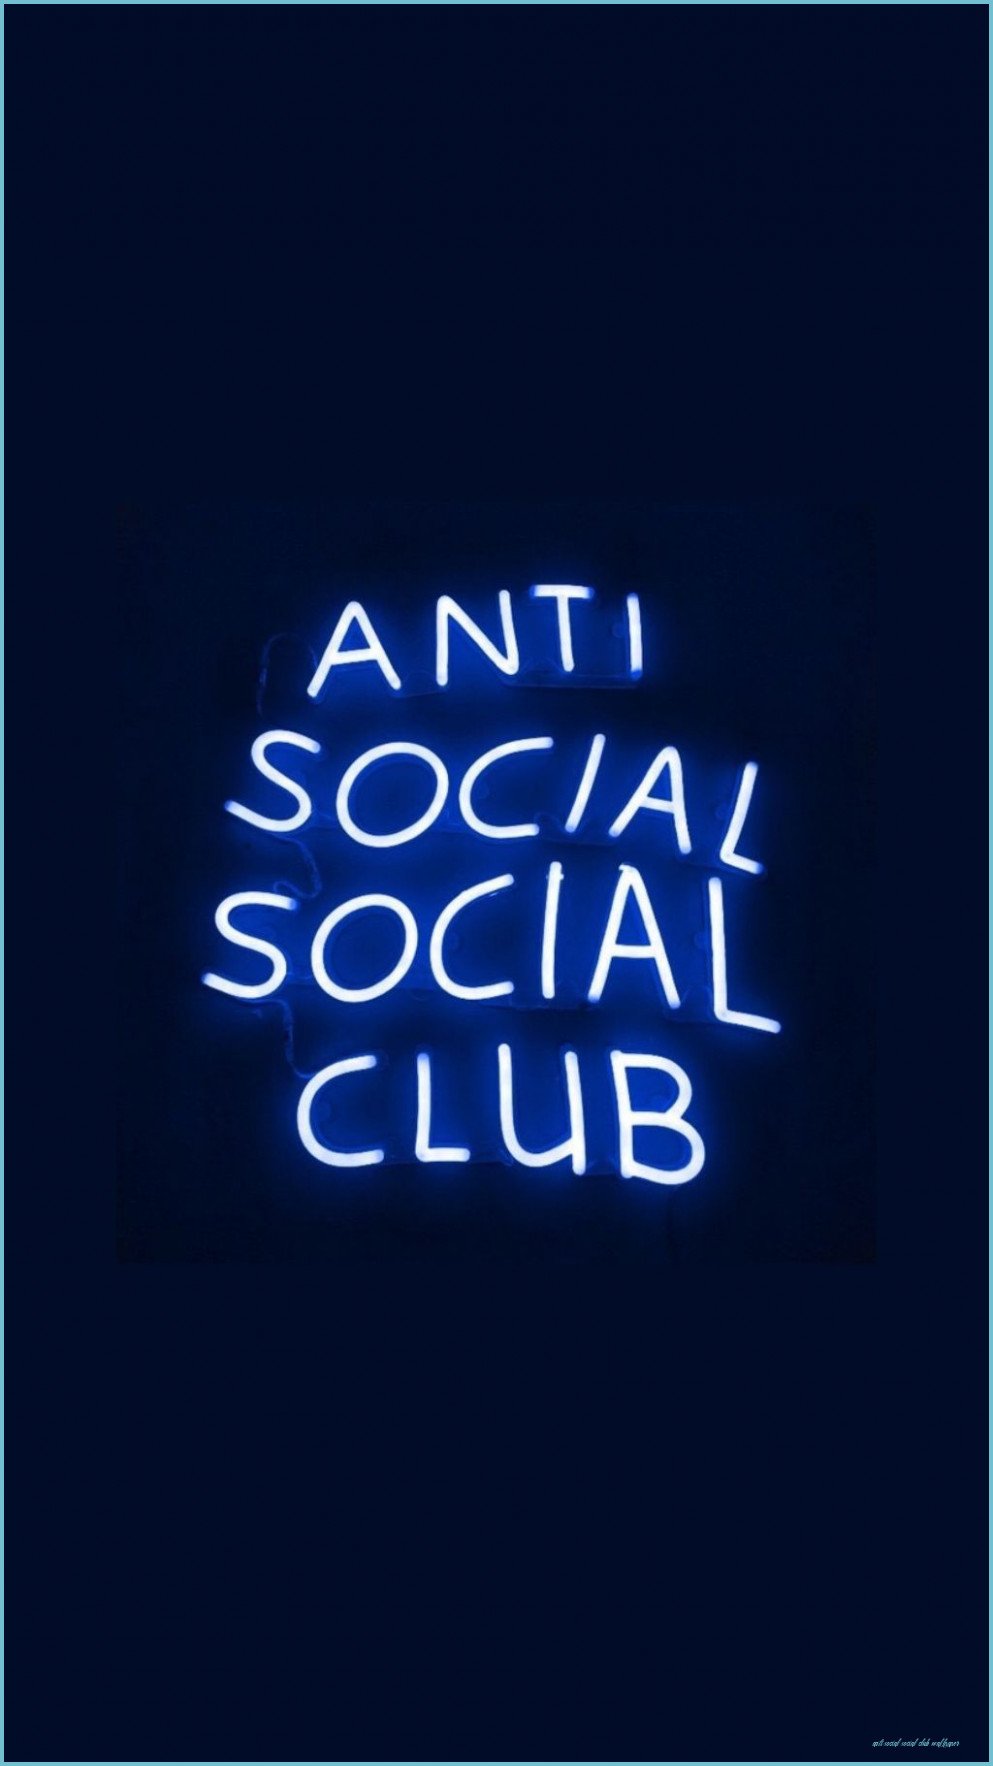 Anti Social Club Wallpaper Free Anti Social Club Social Social Club Wallpaper